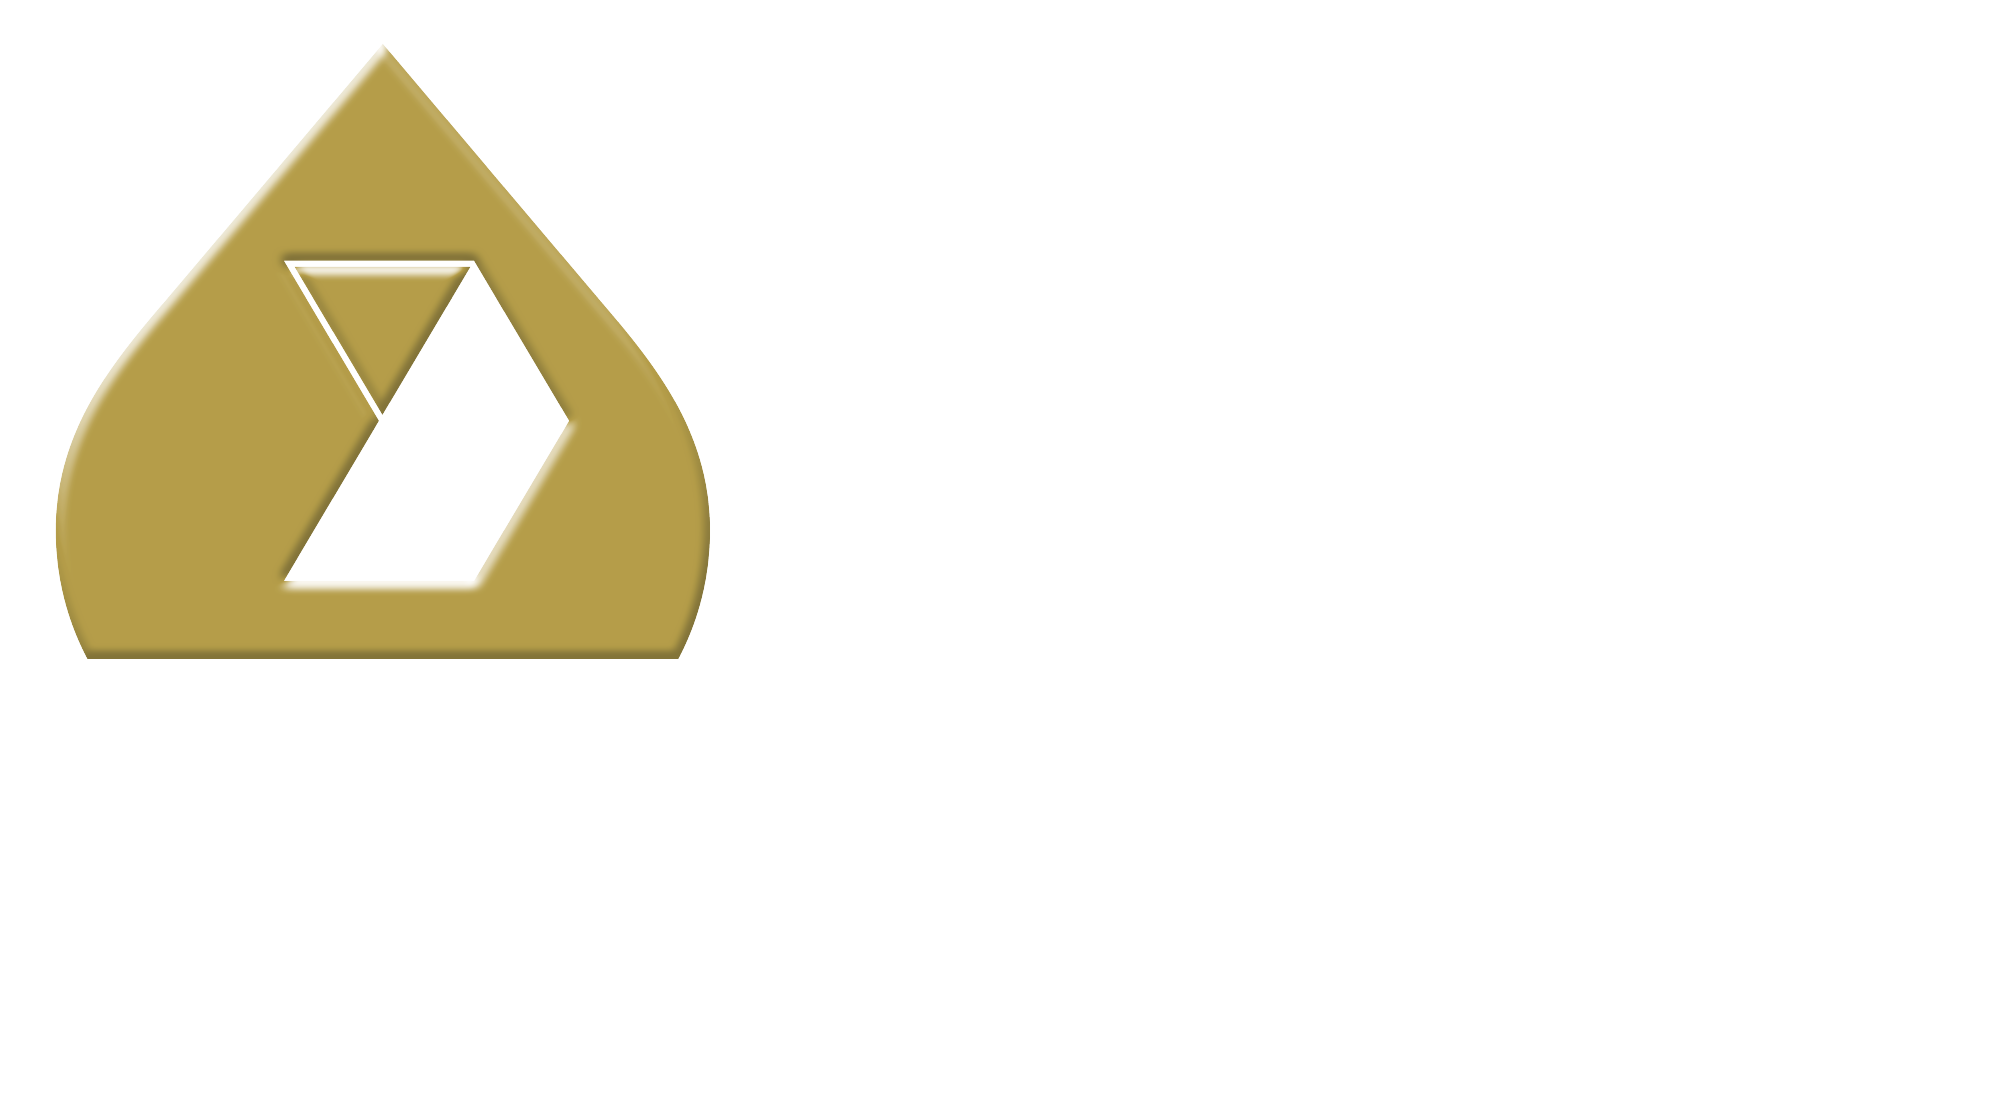 Ace Awards logo